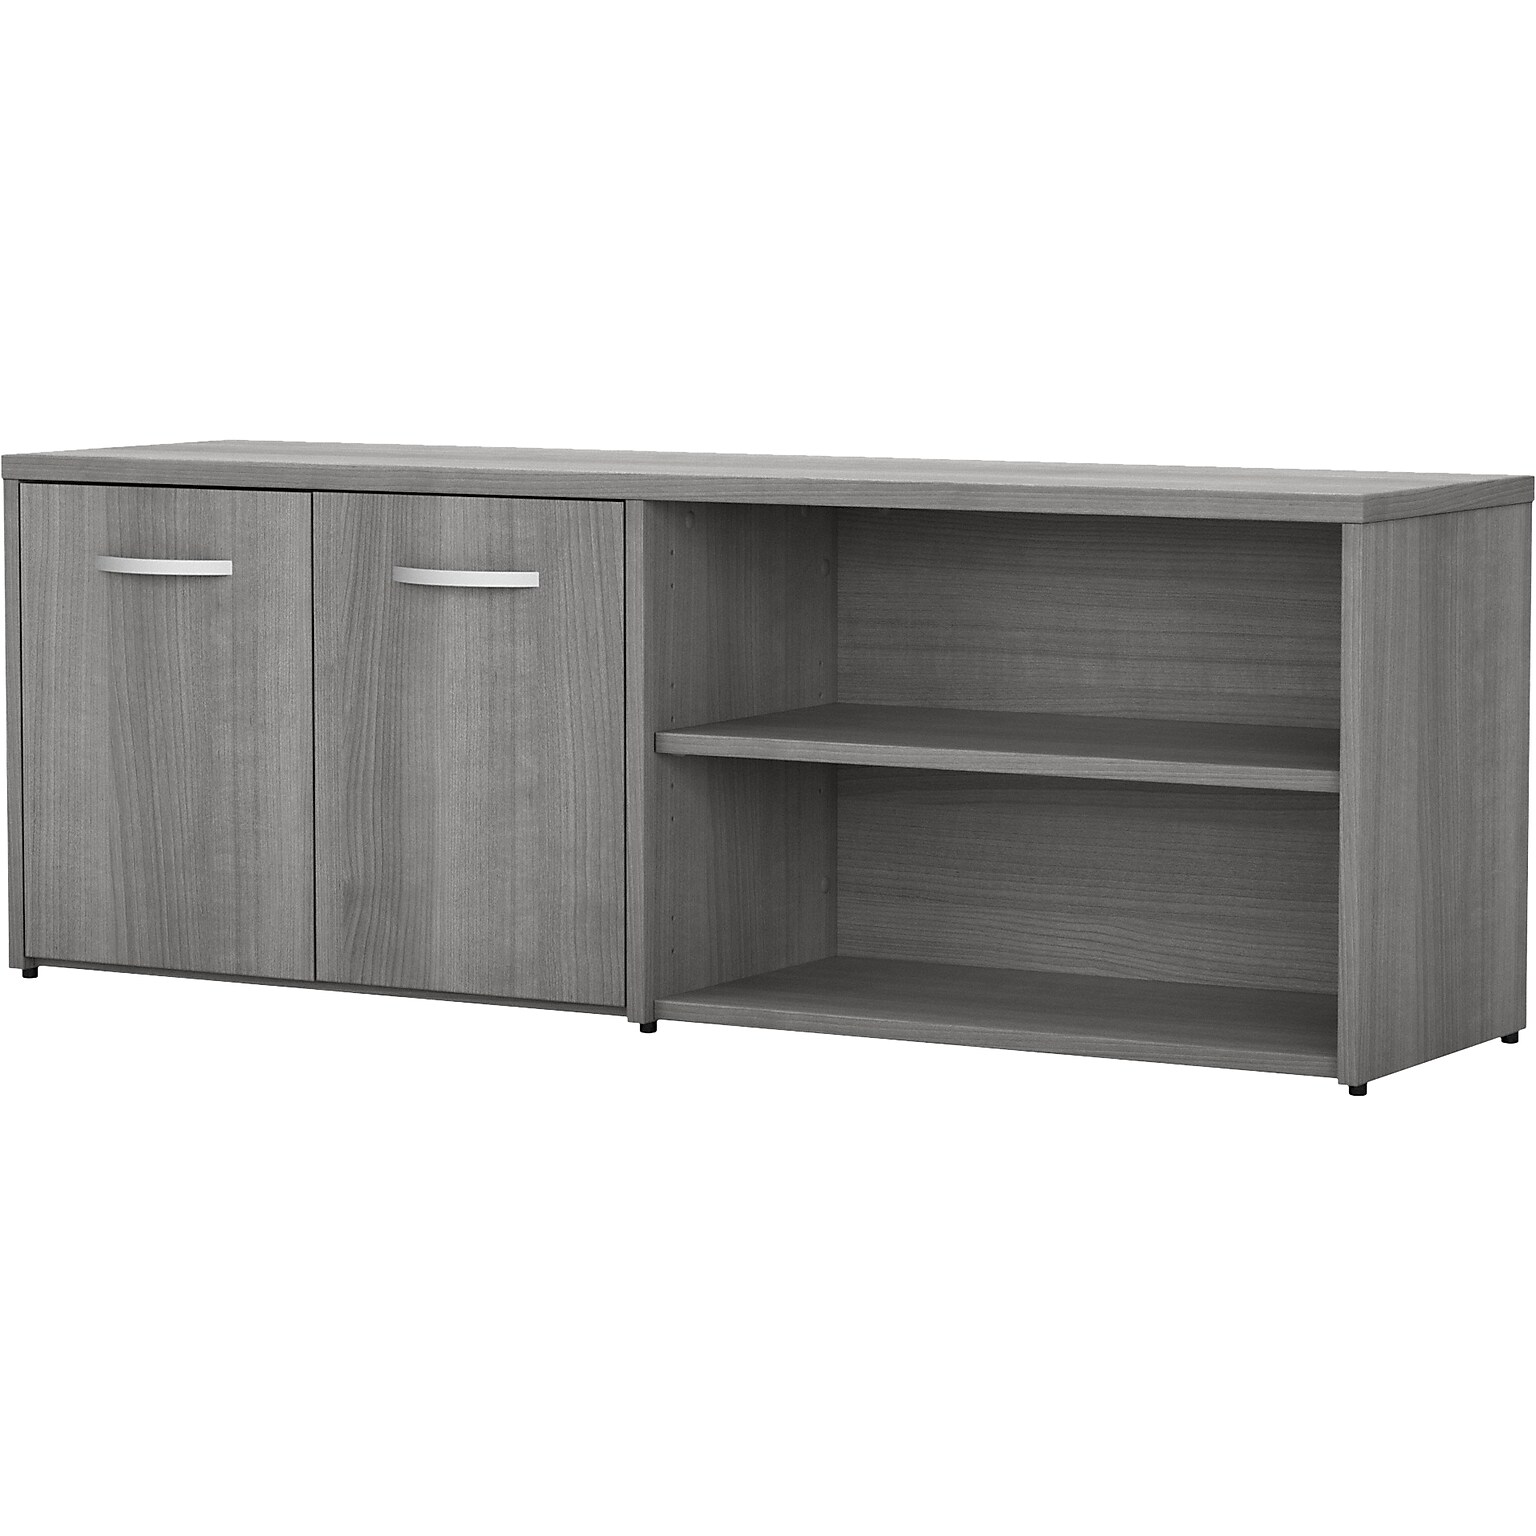 Bush Business Furniture Studio C Low Storage Cabinet with Doors and Shelves, Platinum Gray (SCS160PG)